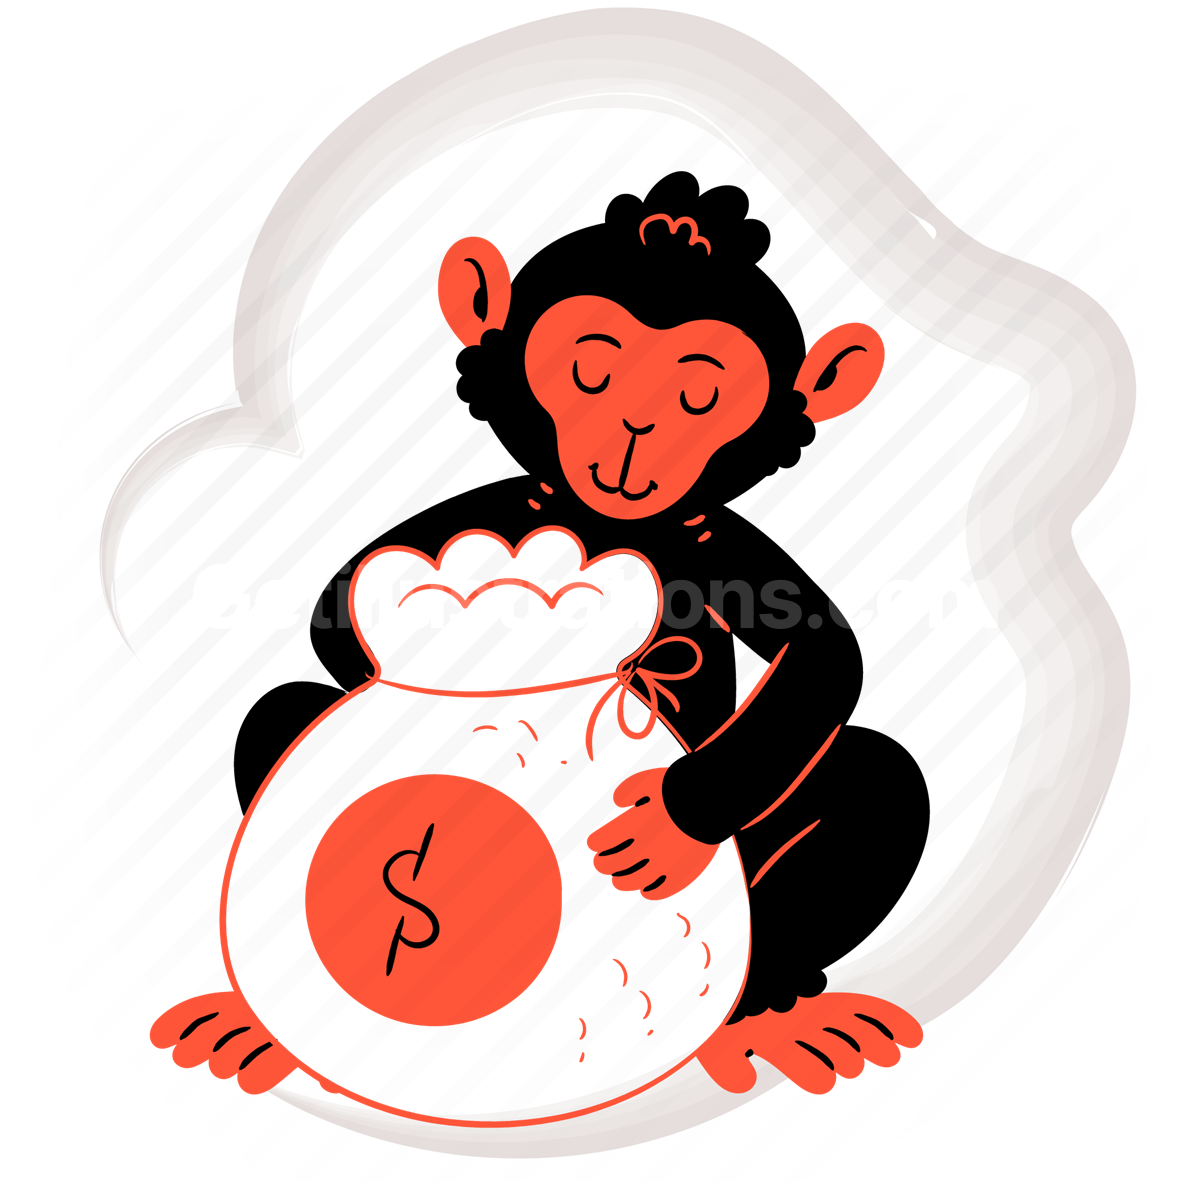 zodiac, horoscope, horoscopes, astrology, symbols, chinese, monkey, money